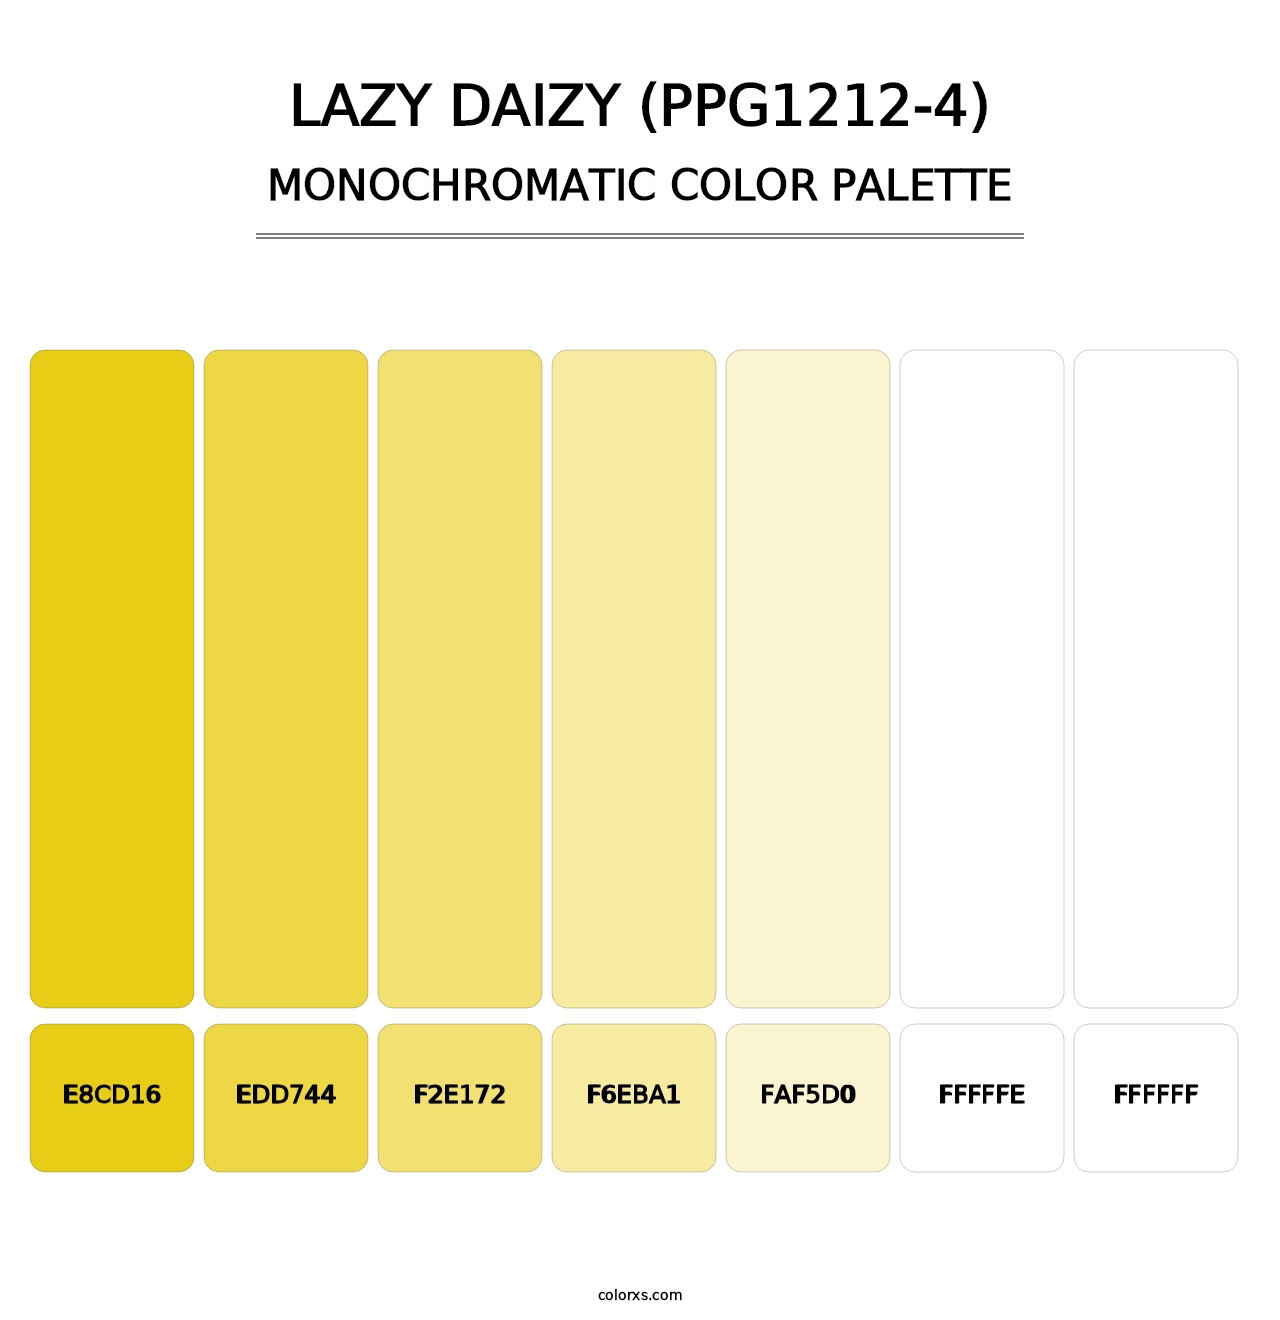 Lazy Daizy (PPG1212-4) - Monochromatic Color Palette